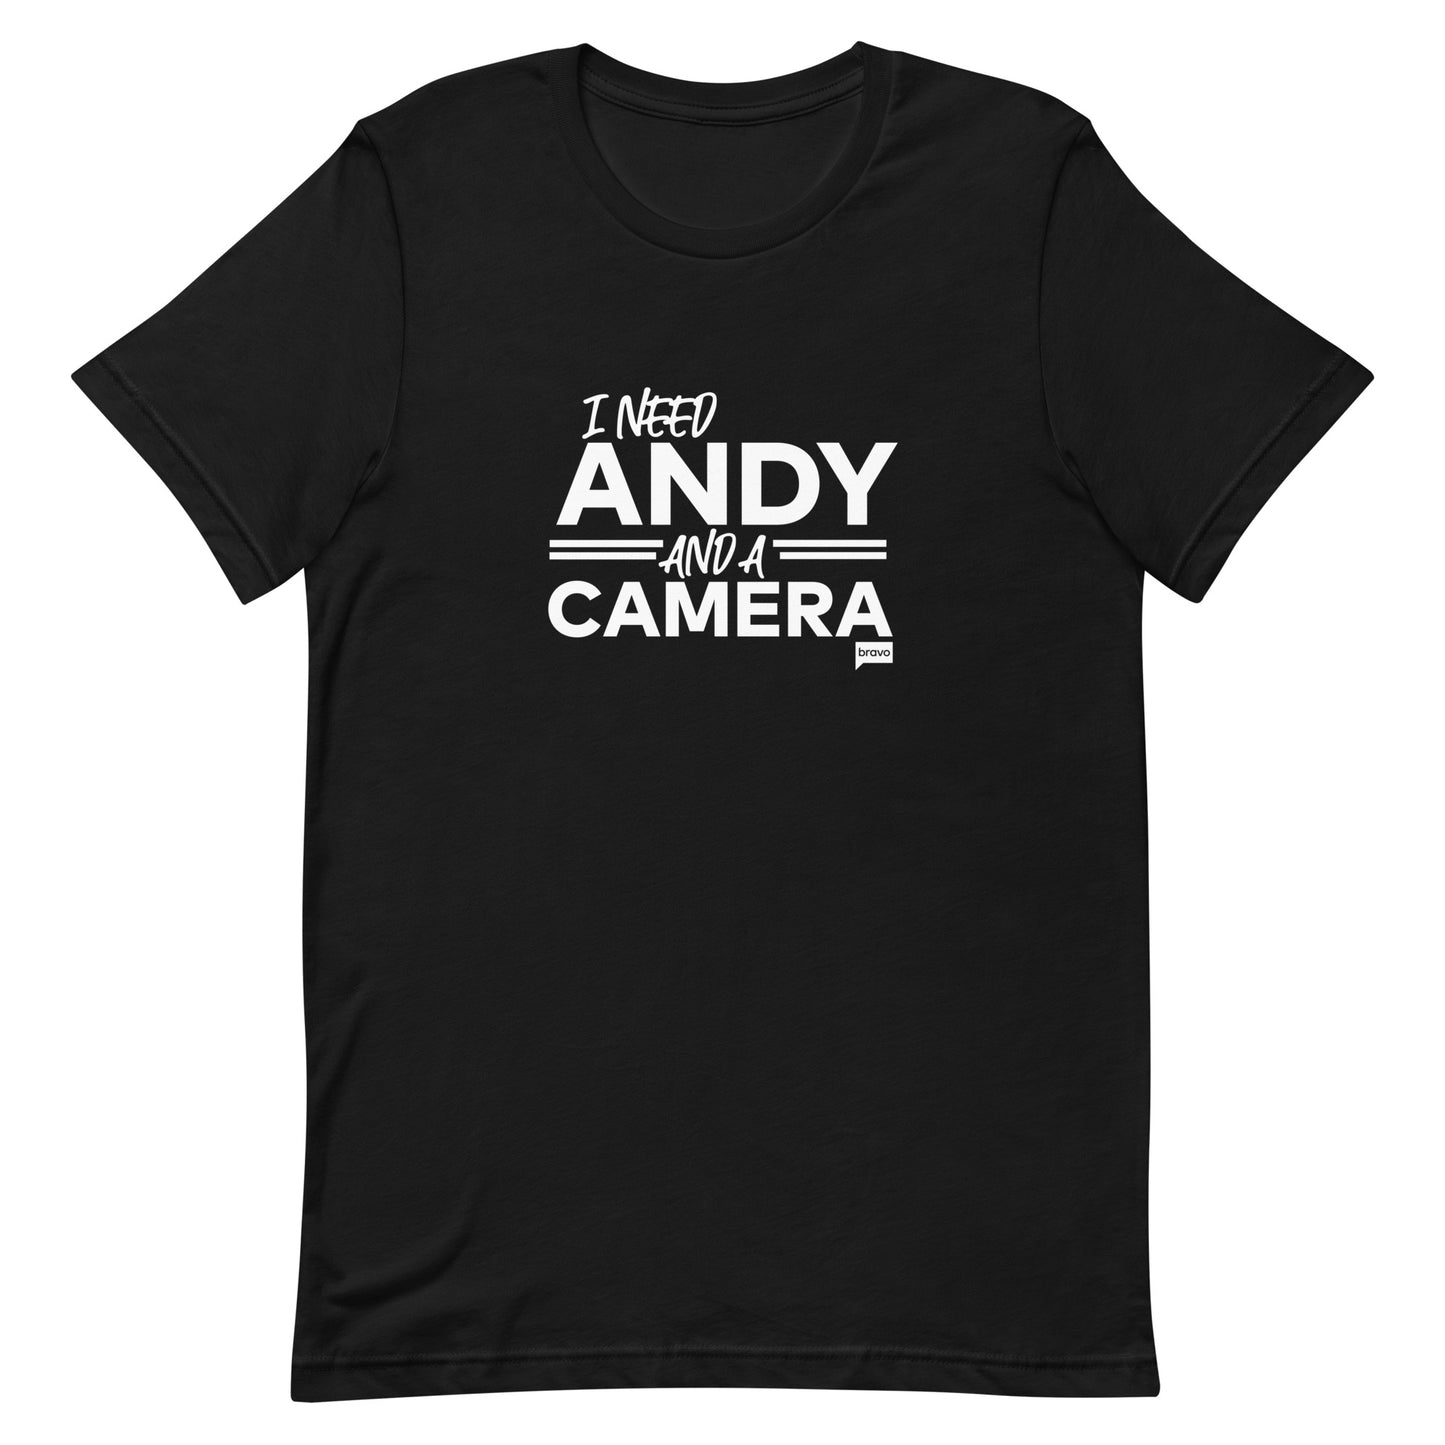 I Need Andy and a Camera T-Shirt